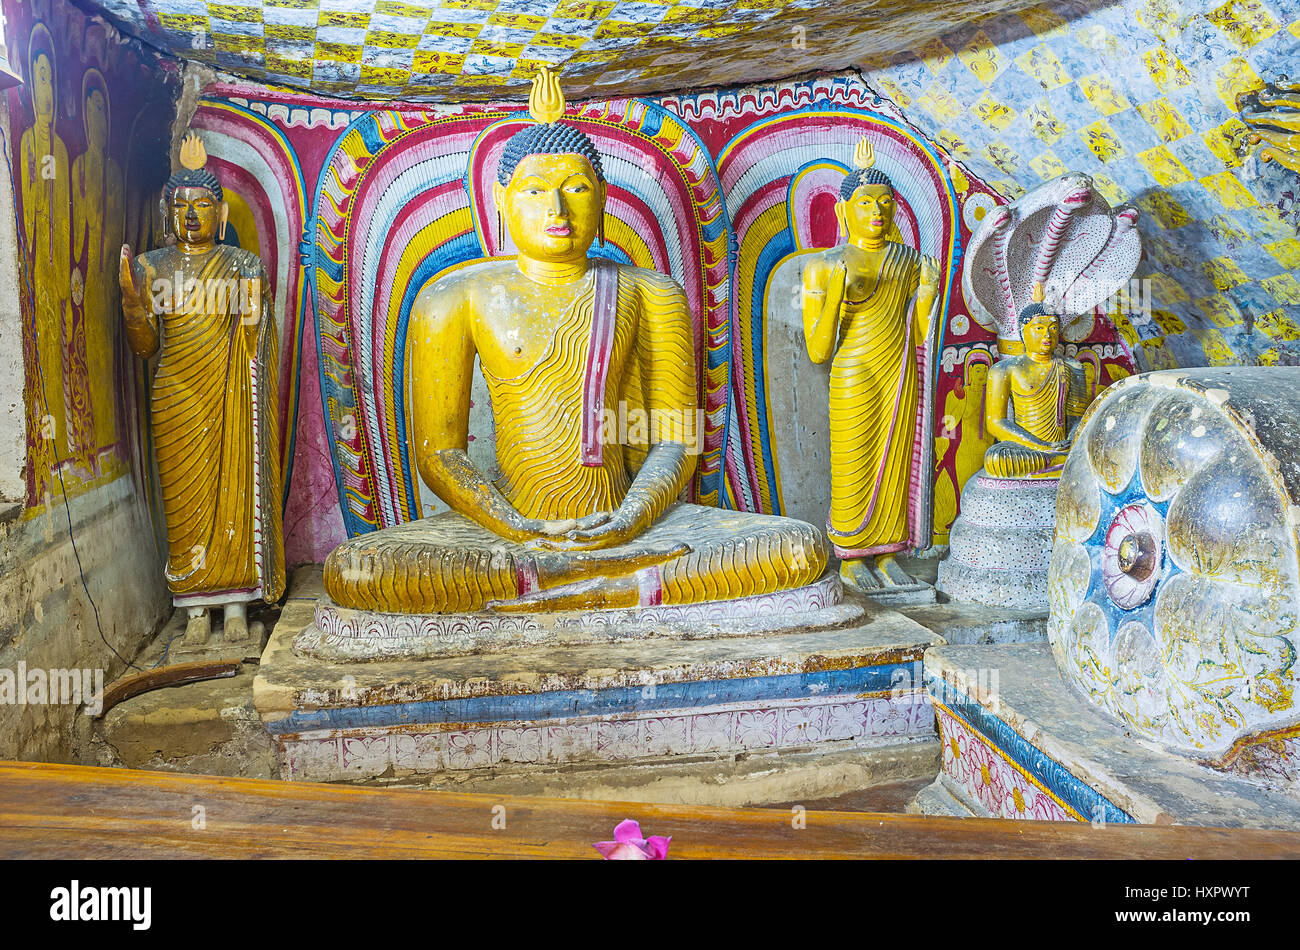 DAMBULLA, SRI LANKA - 27. November 2016: die Statuen in Devana Alut Viharaya (zweite New Temple) von Dambulla Höhle Kloster am 27. November in Dambull Stockfoto